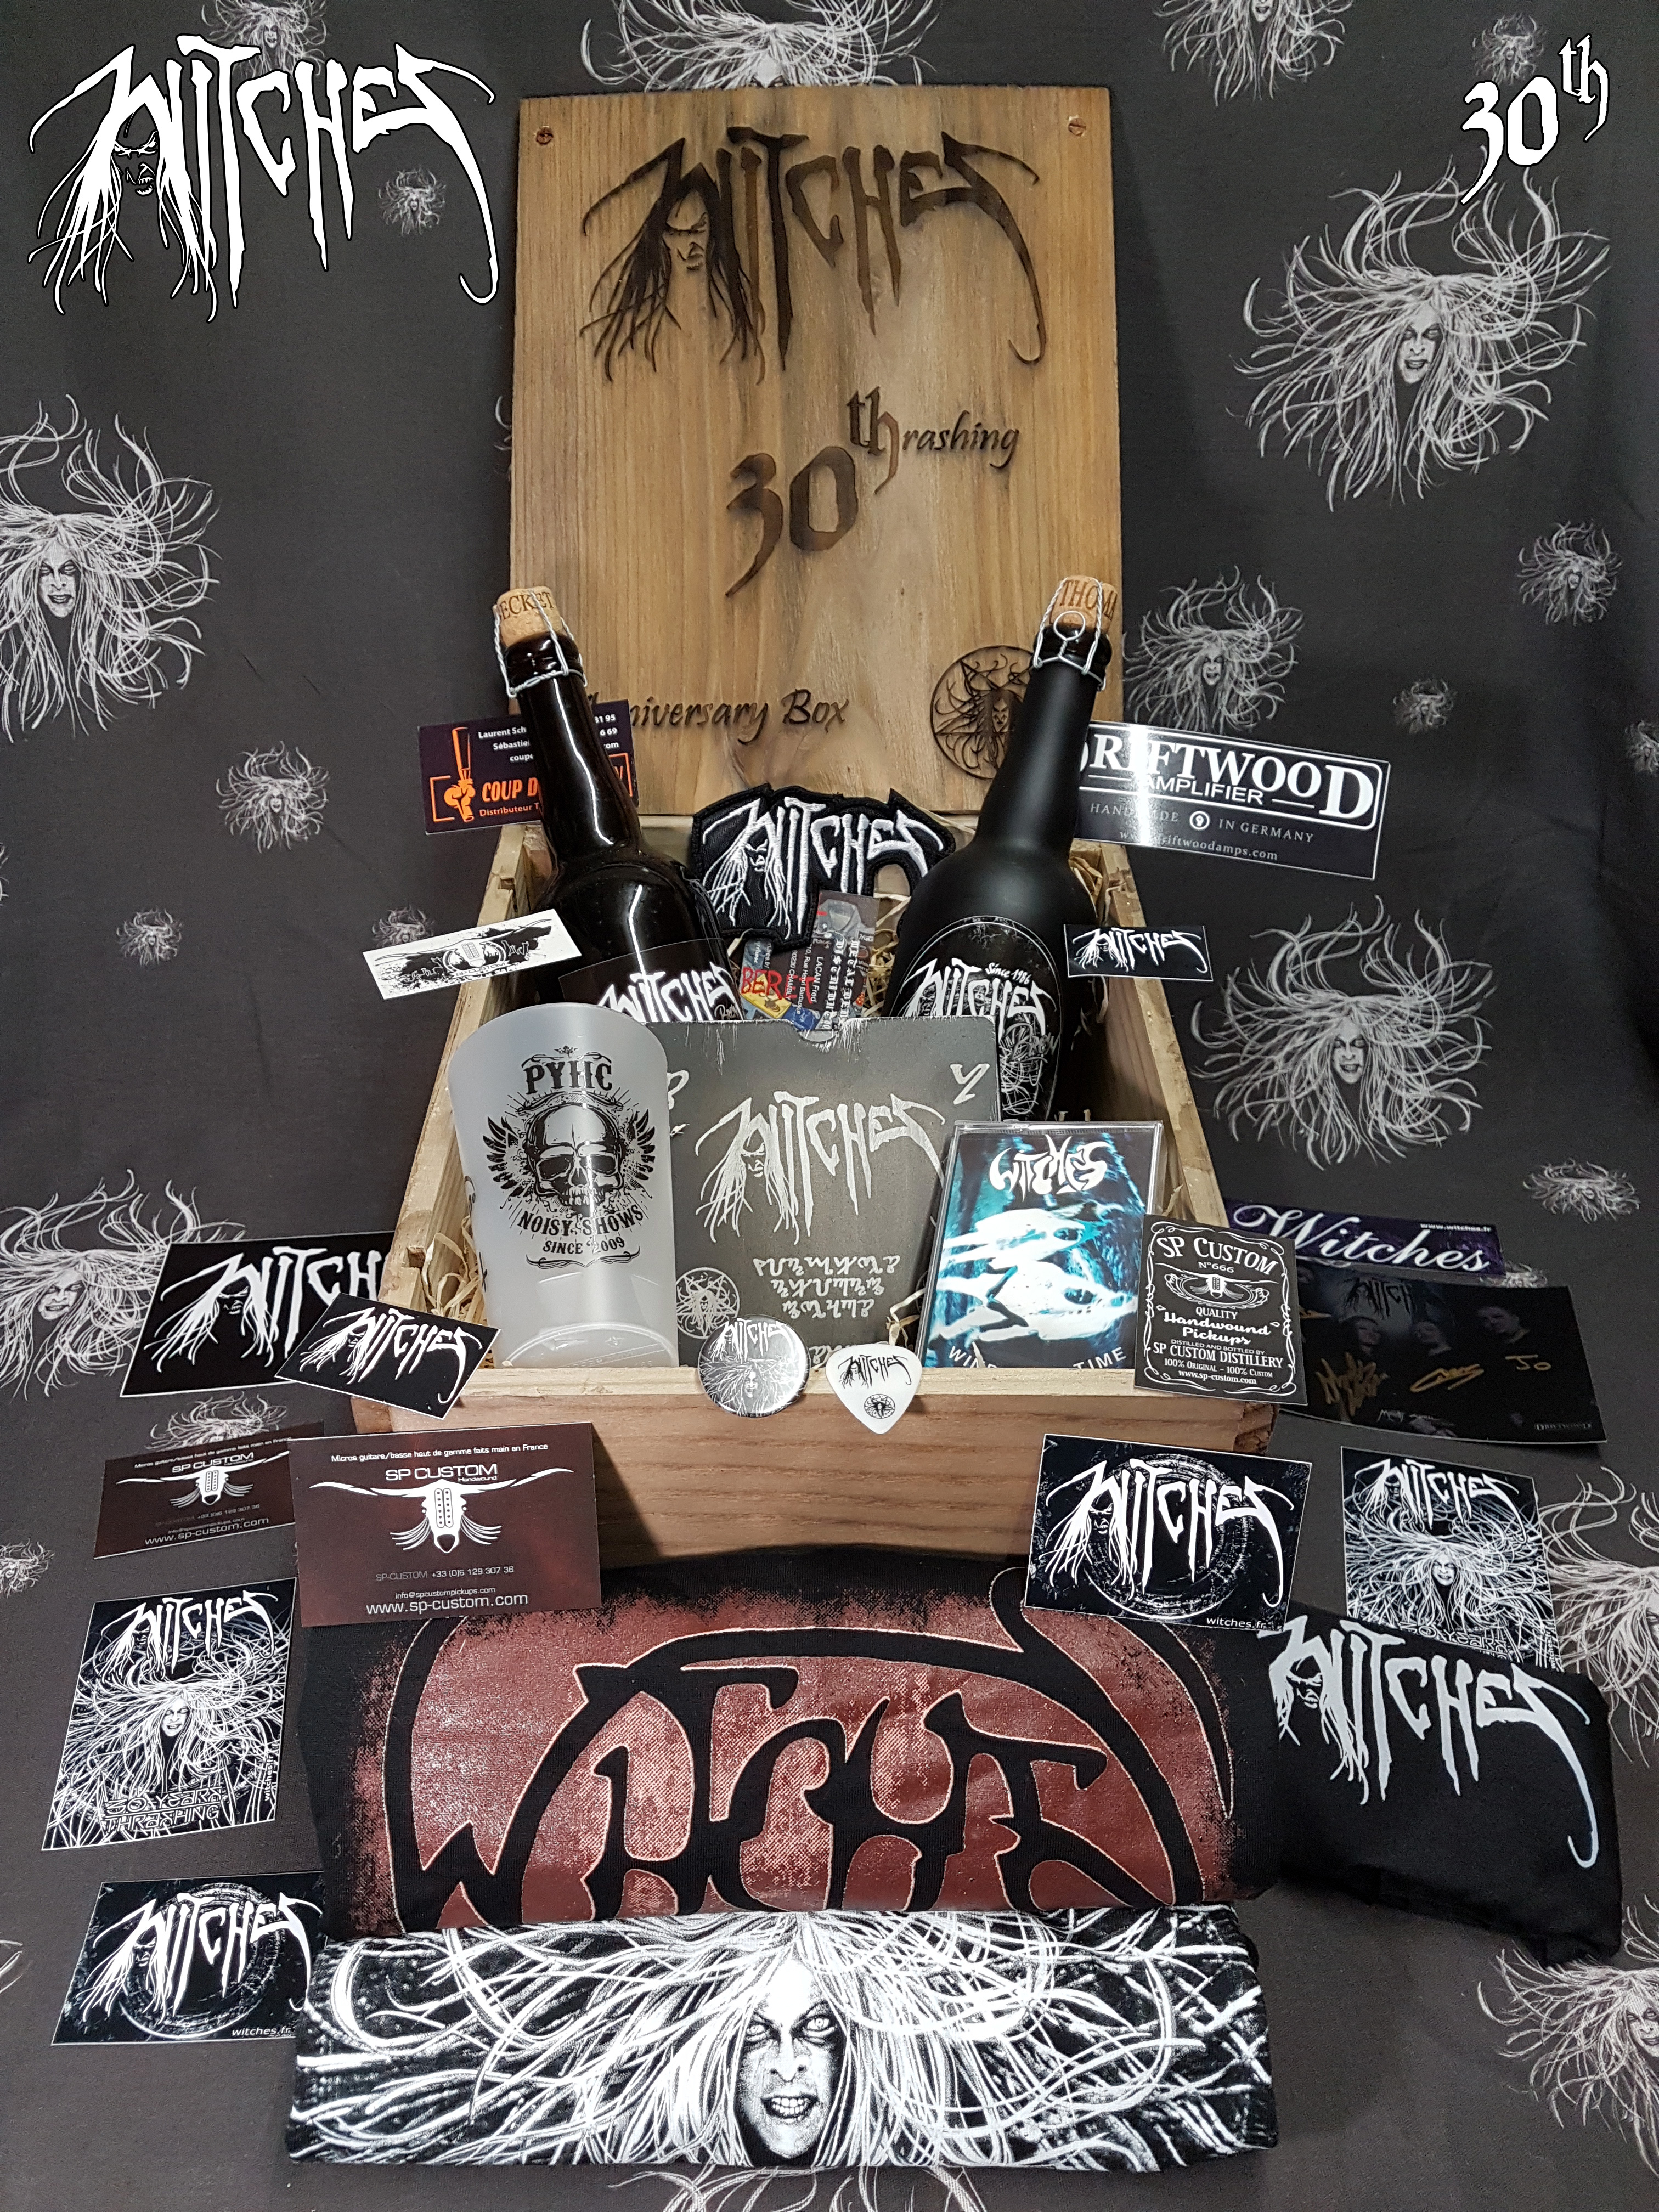 Witches 30th Anniversary Thrash Metal Box